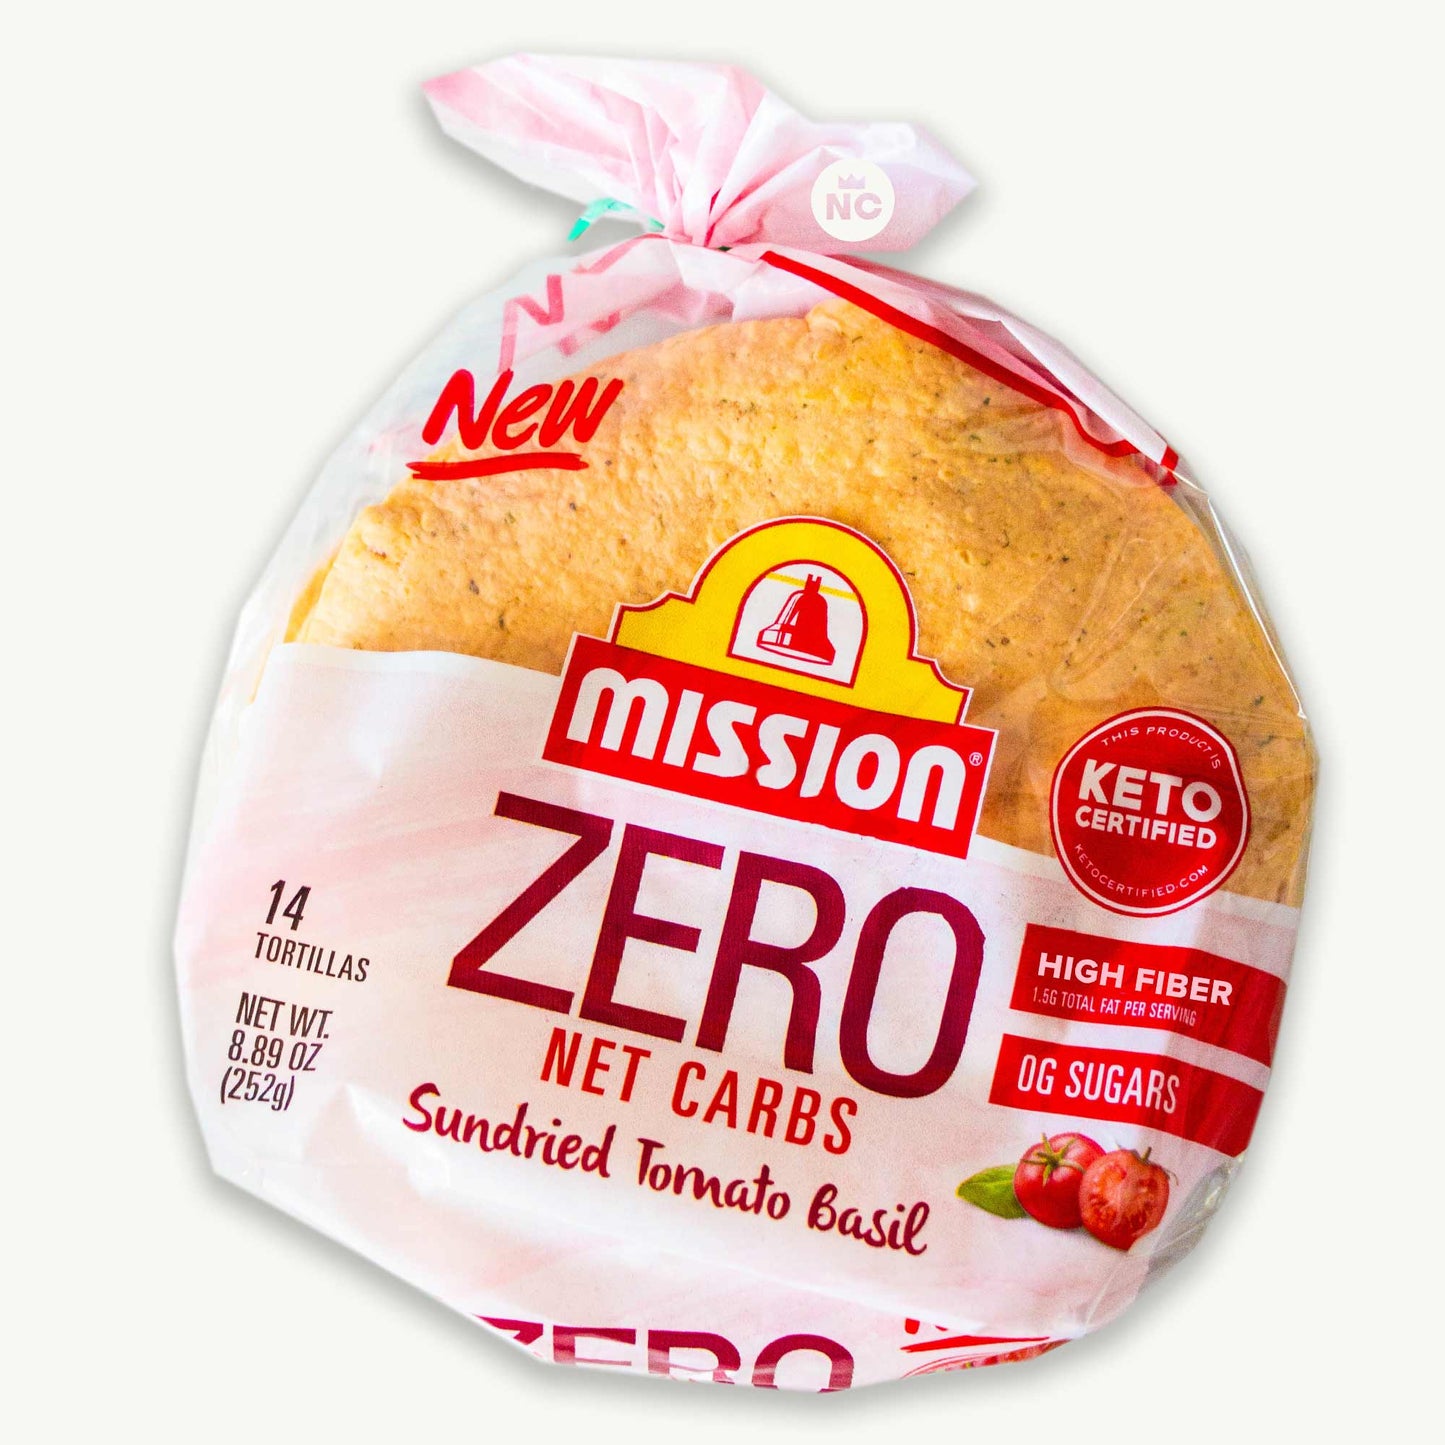 Mission Zero Net Carbs Sundried Tomato Basil 14ct